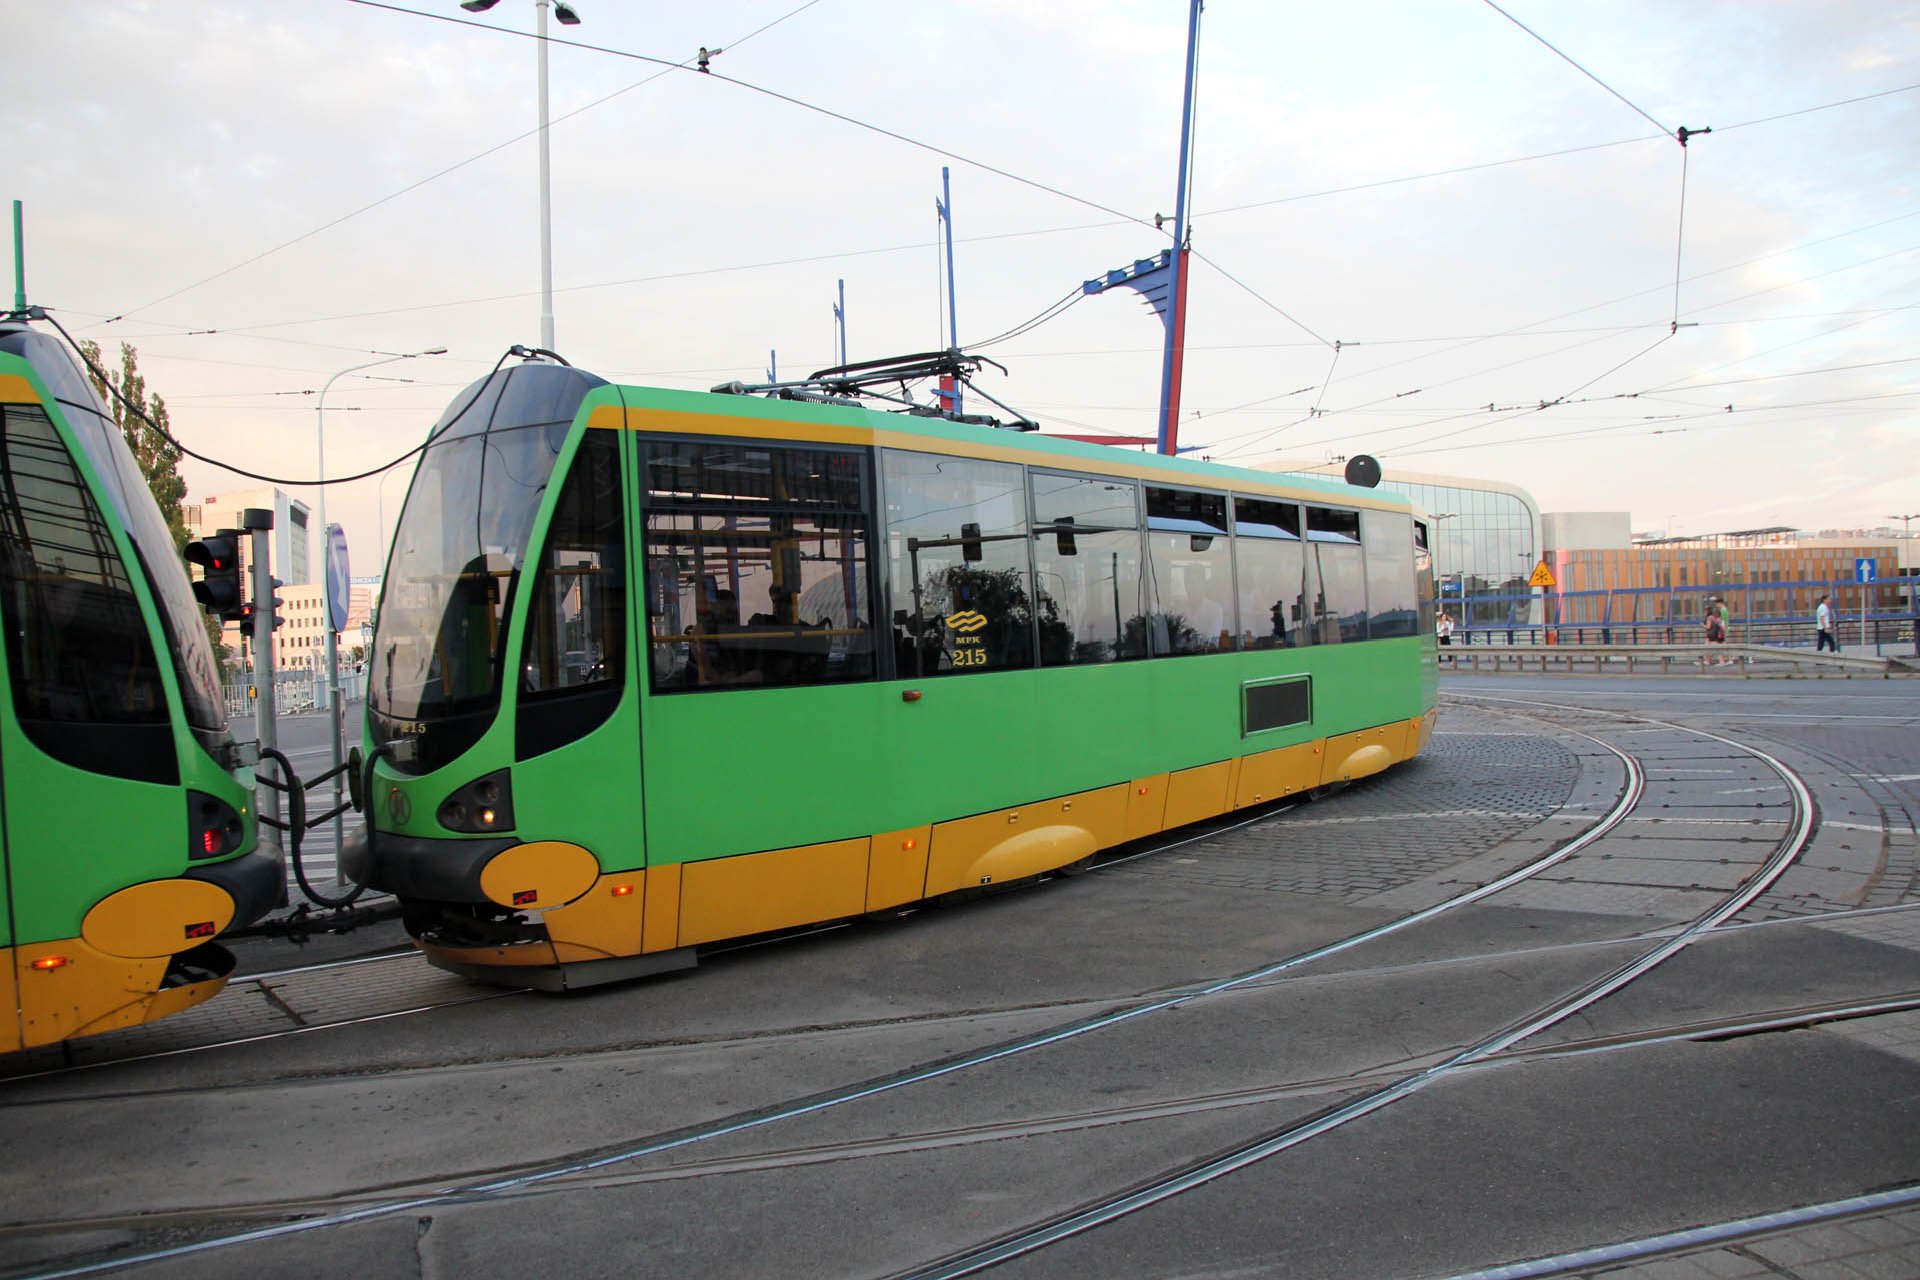 Alfa 215 Die Fahrzeuge sind 13,5 m lang und 2,35 m breit. The trams are 13.5 m long and 2.35 m wide.